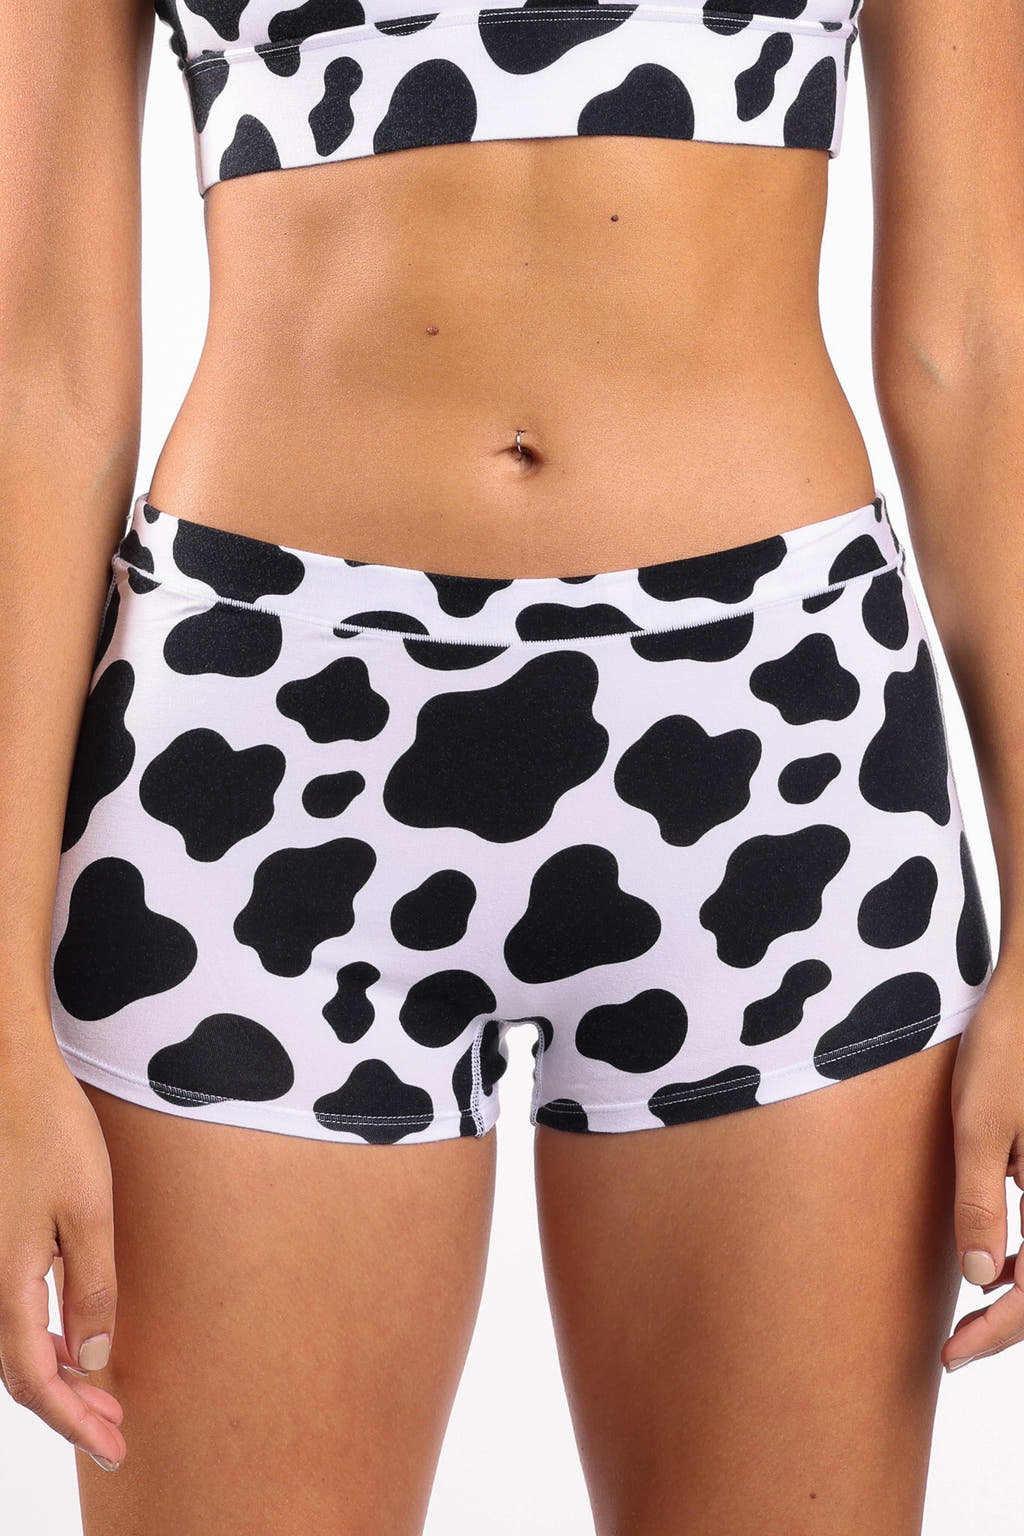 The Milk Me | Cow Print Modal Boyshort Underwear